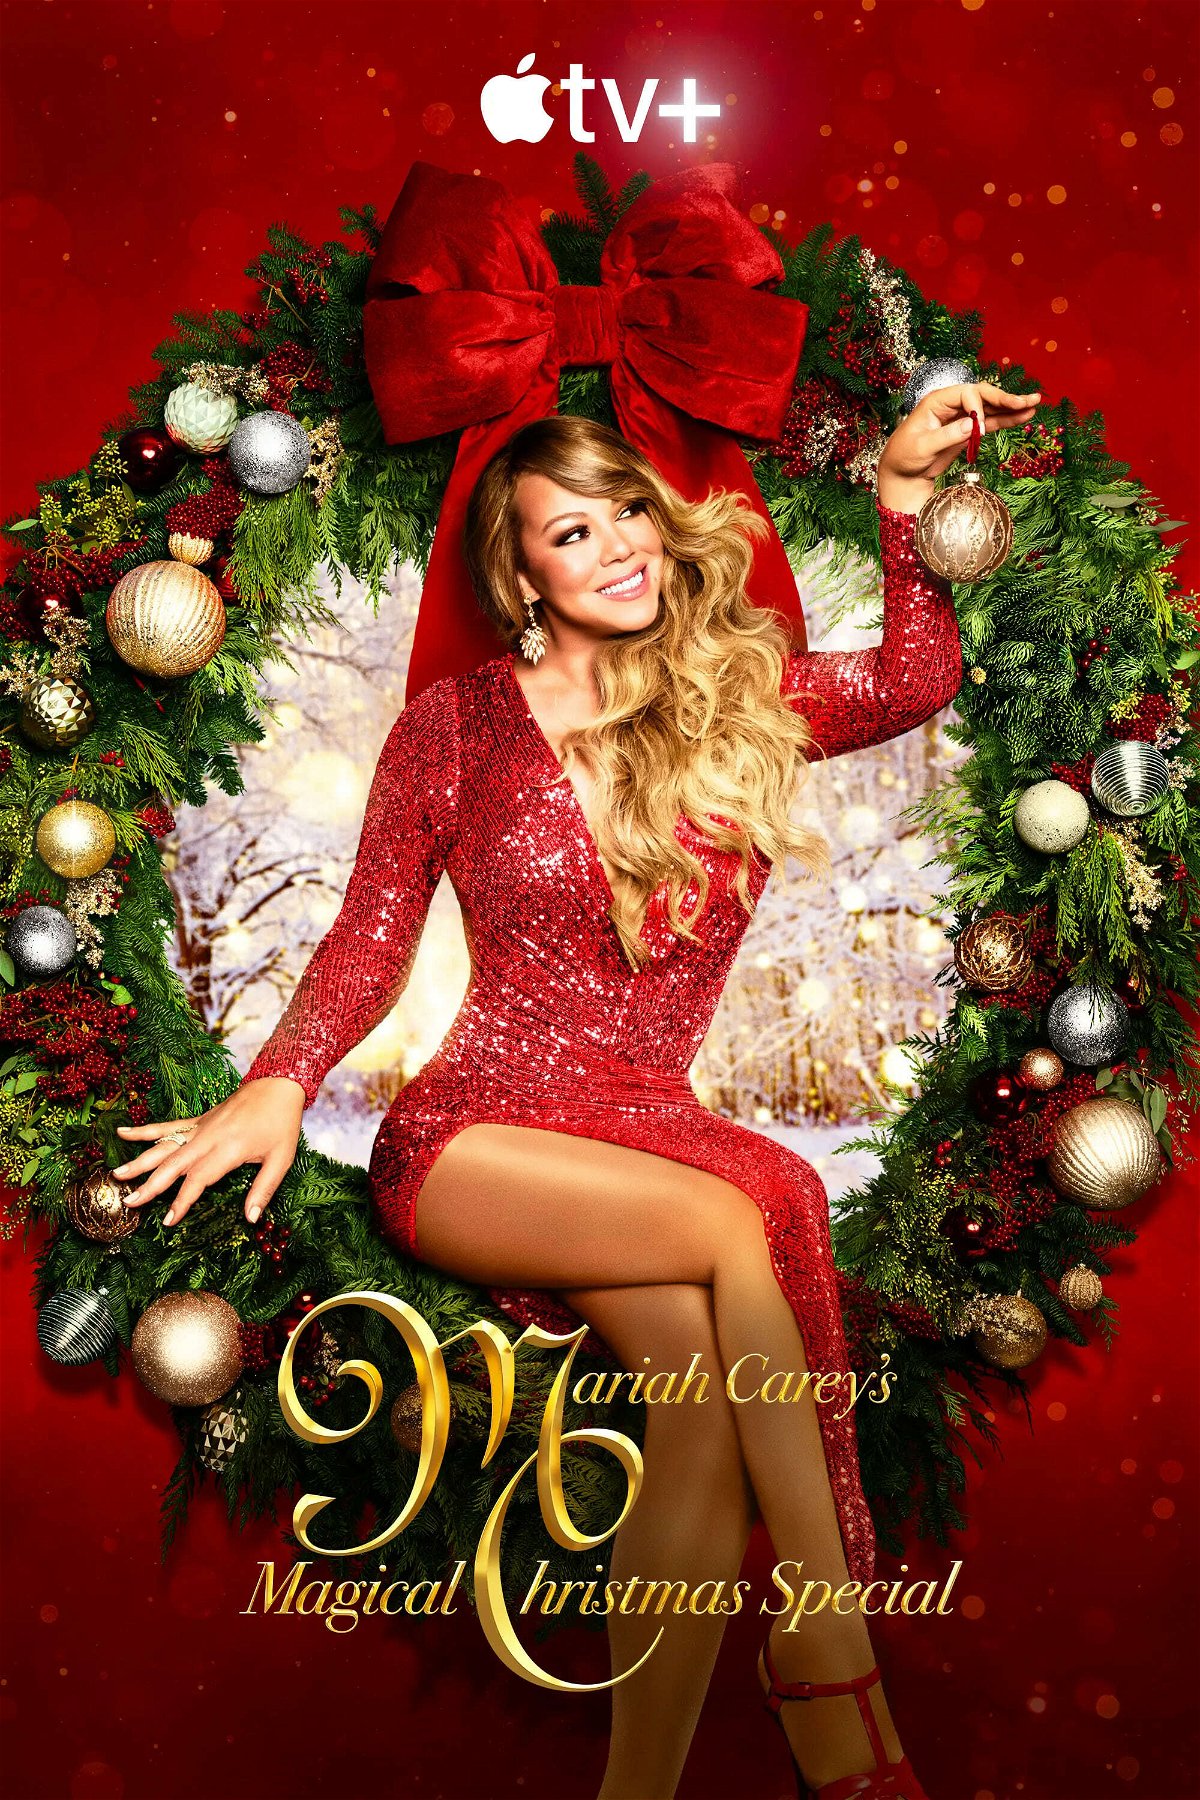 Mariah Carey nella locandina di Mariah Carey’s Magical Christmas Special